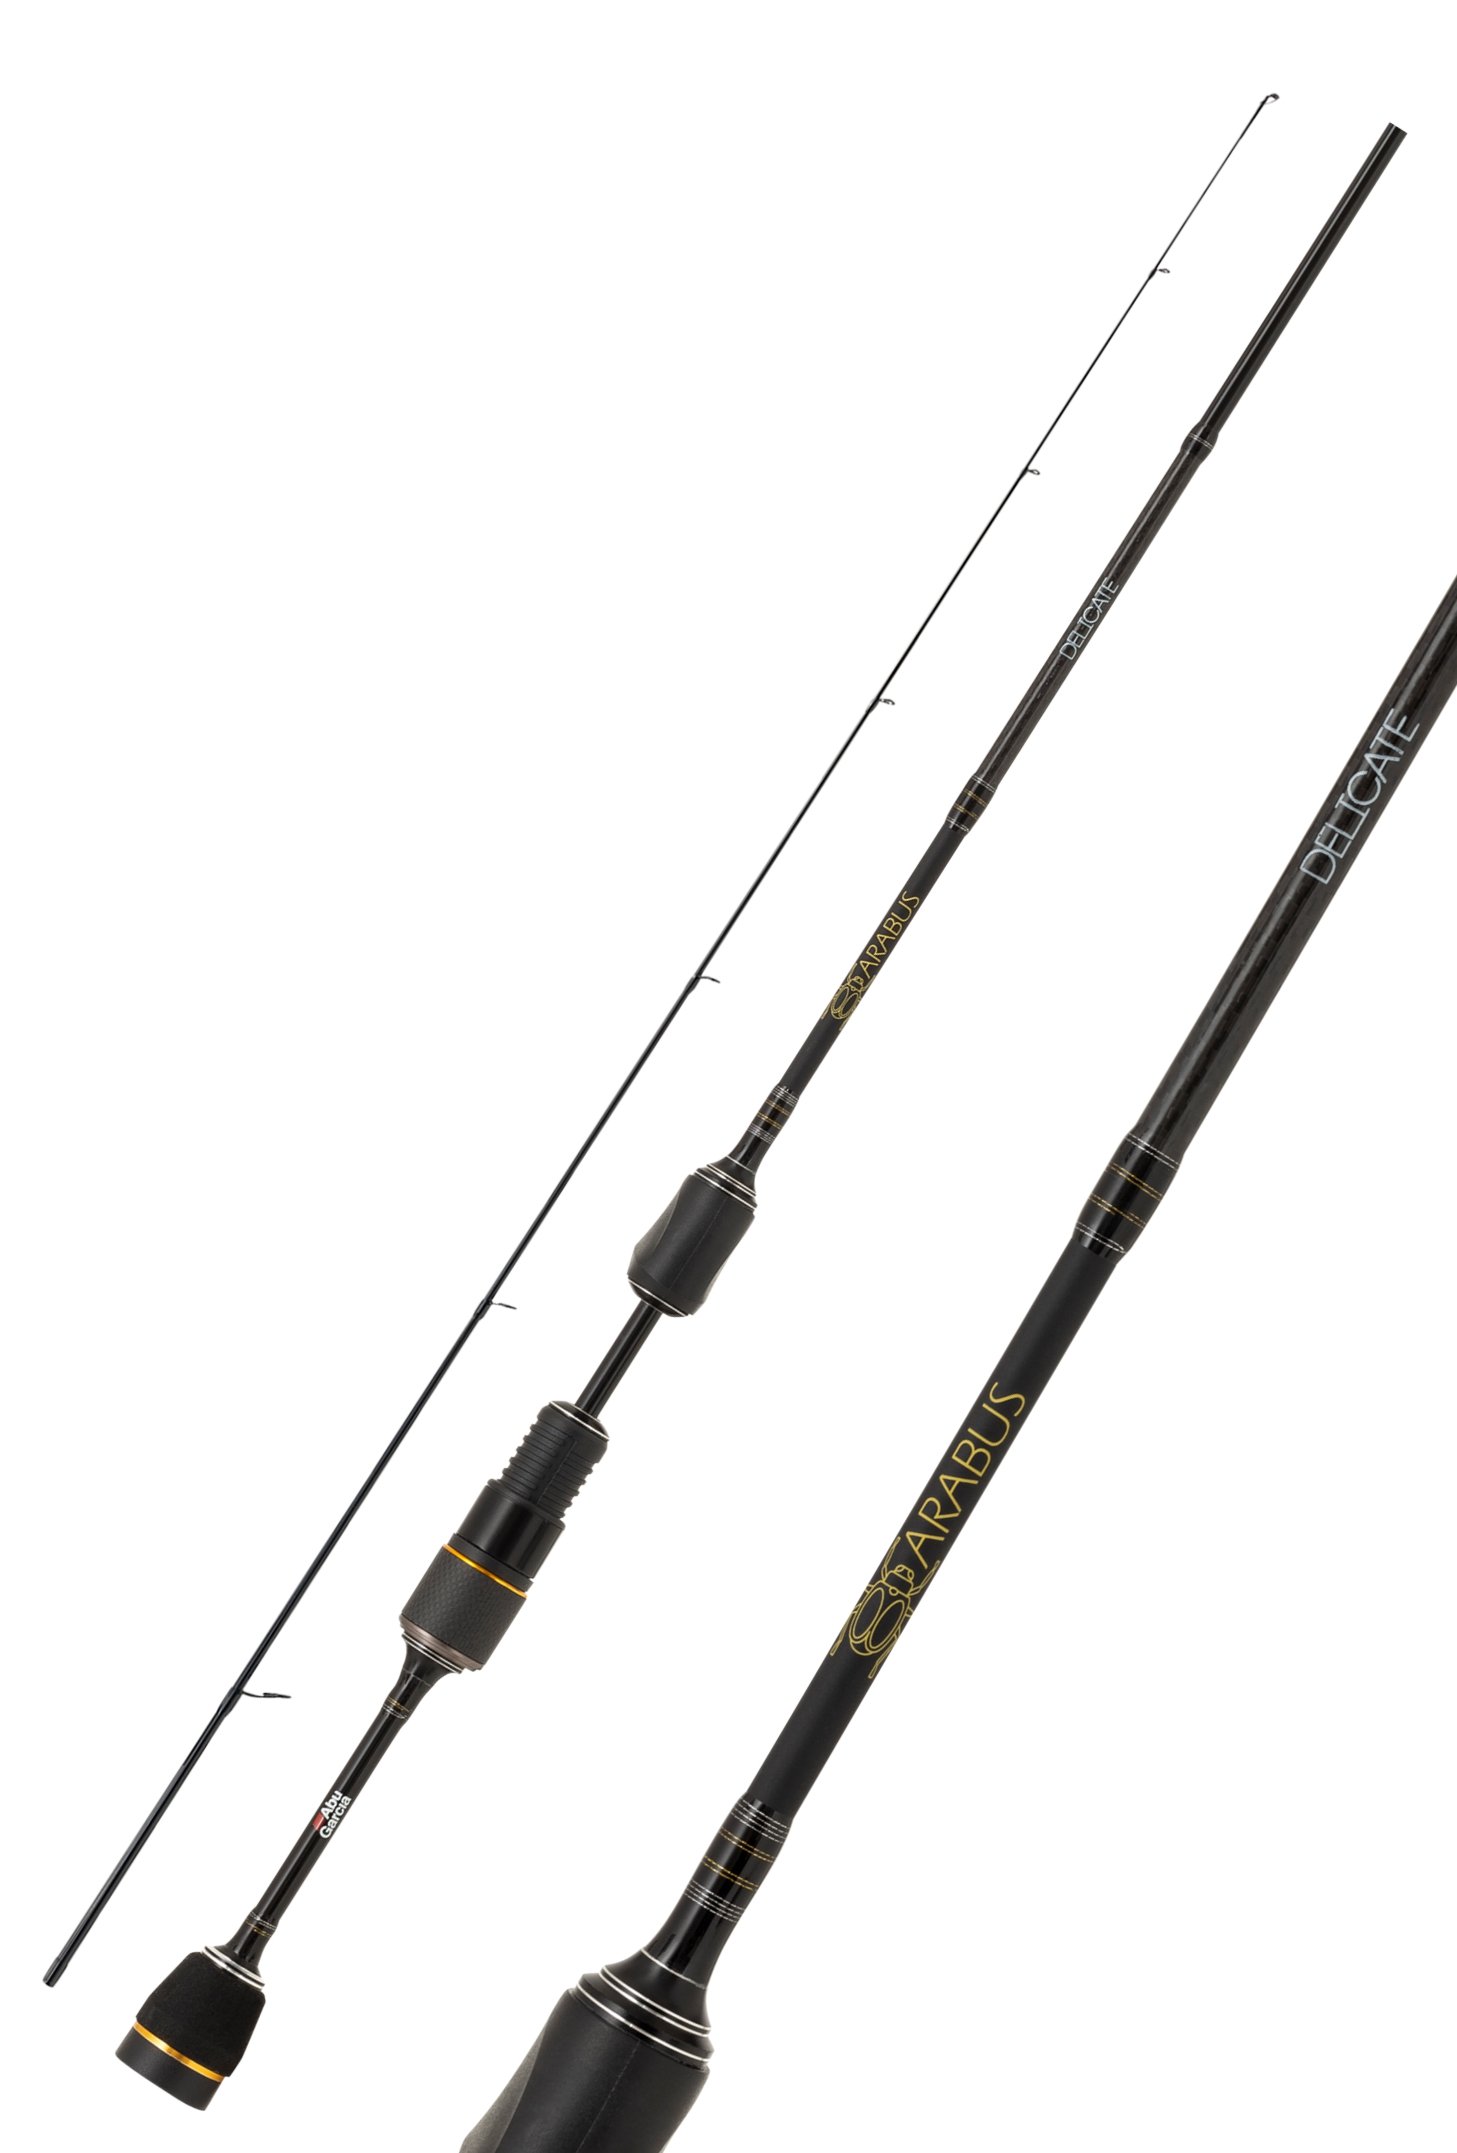 Abu Gracia Carabus Delicate Rod Fishing Rod Spinning Ultralight